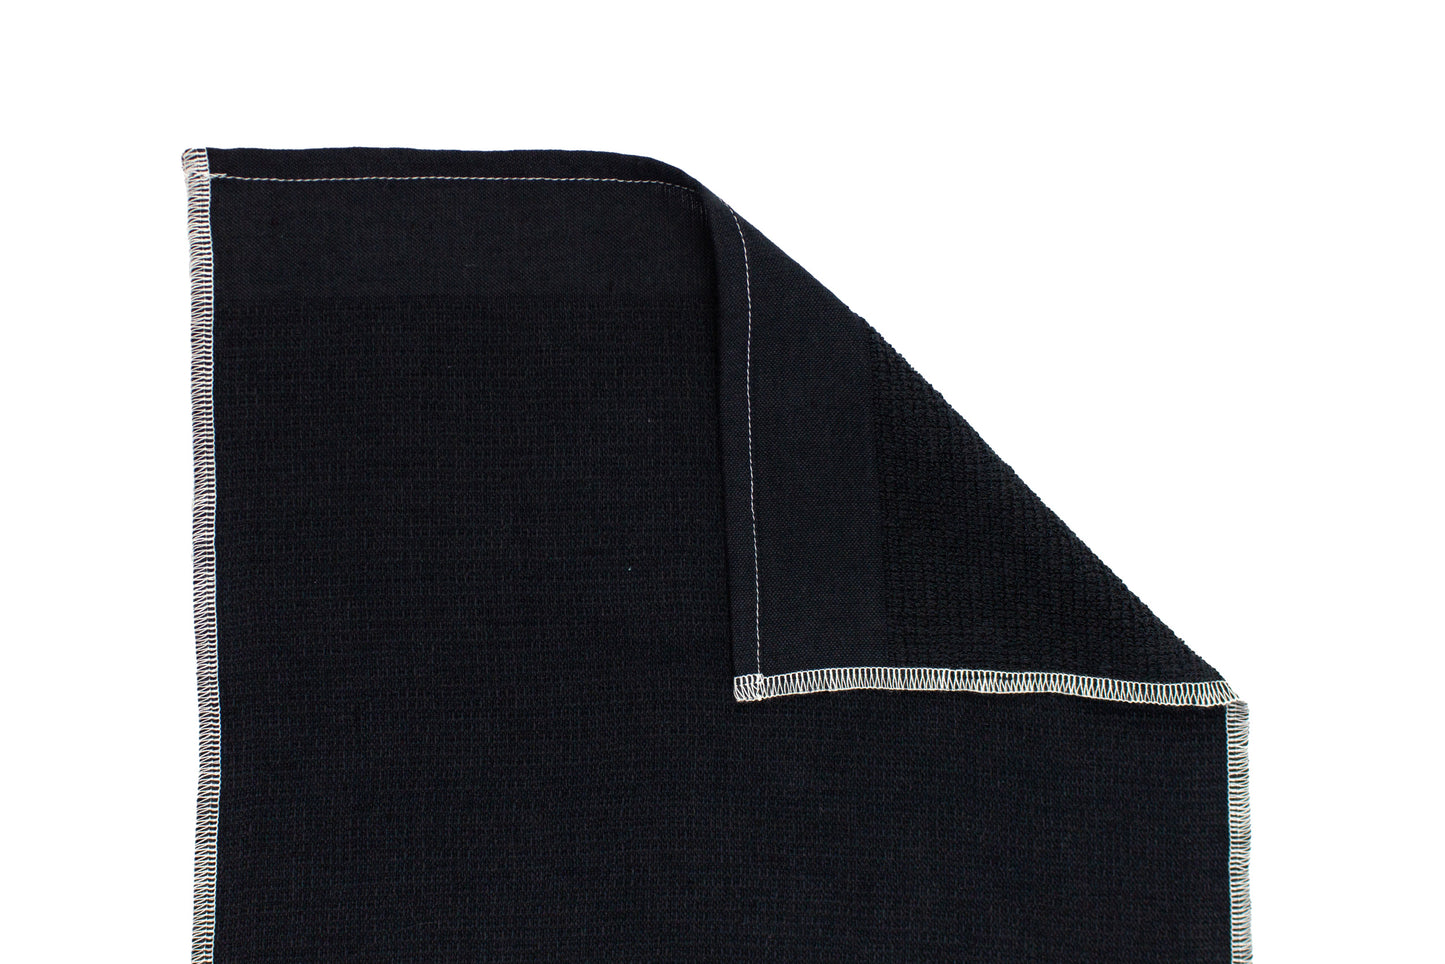 Moku charcoal black - Lightweight Cotton Towel Tenugui